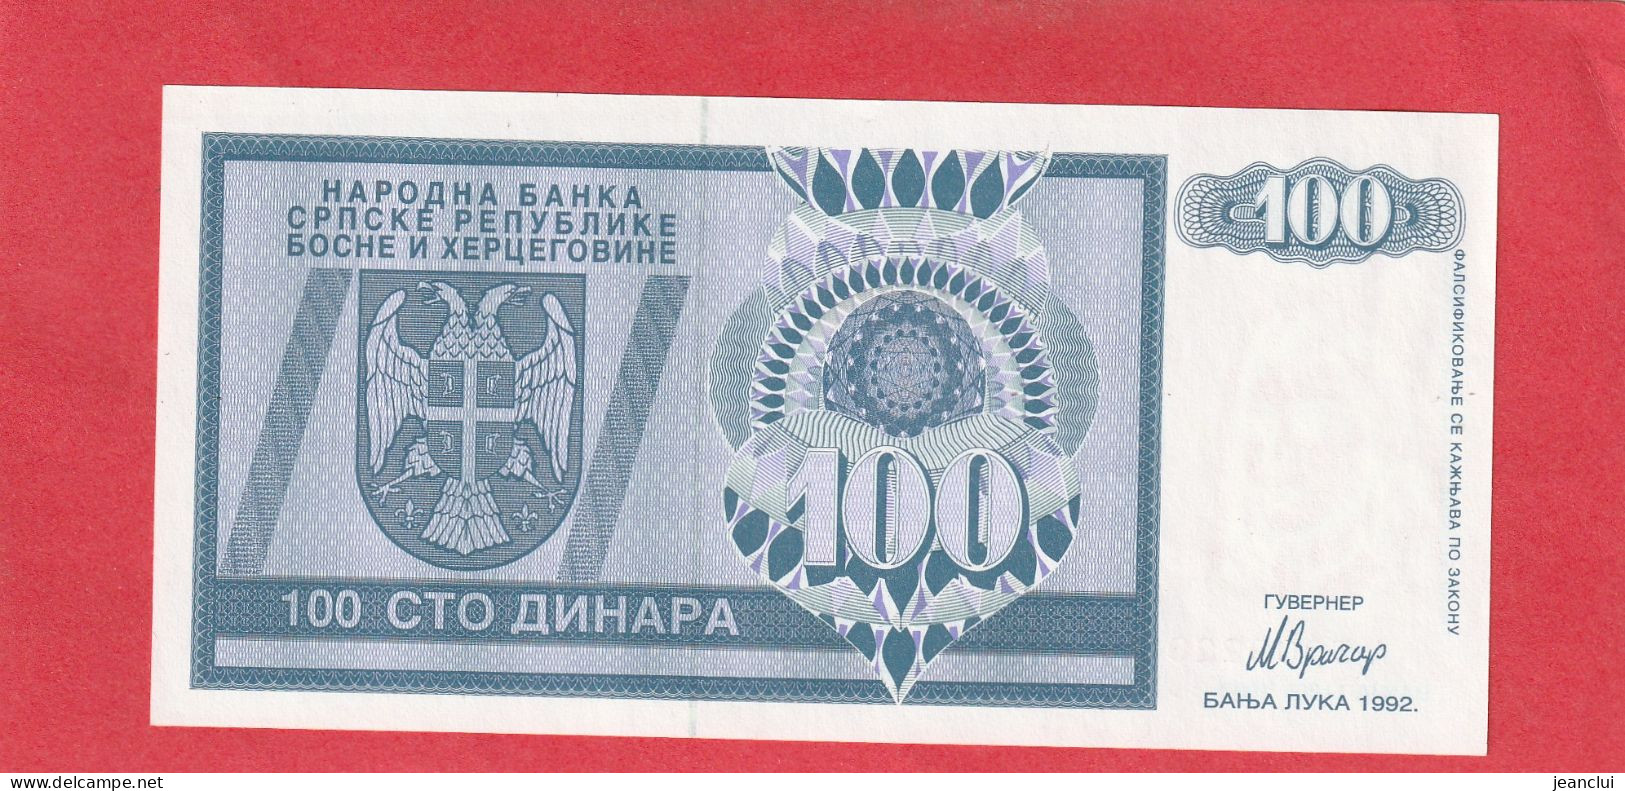 NATIONAL BANK OF SERBIAN REPUBLIC OF BOSNIA & HERZEGOVINA . 100 DINARA.  N° AA 5009220   2 SCANNES  .  ETAT LUXE - Bosnië En Herzegovina